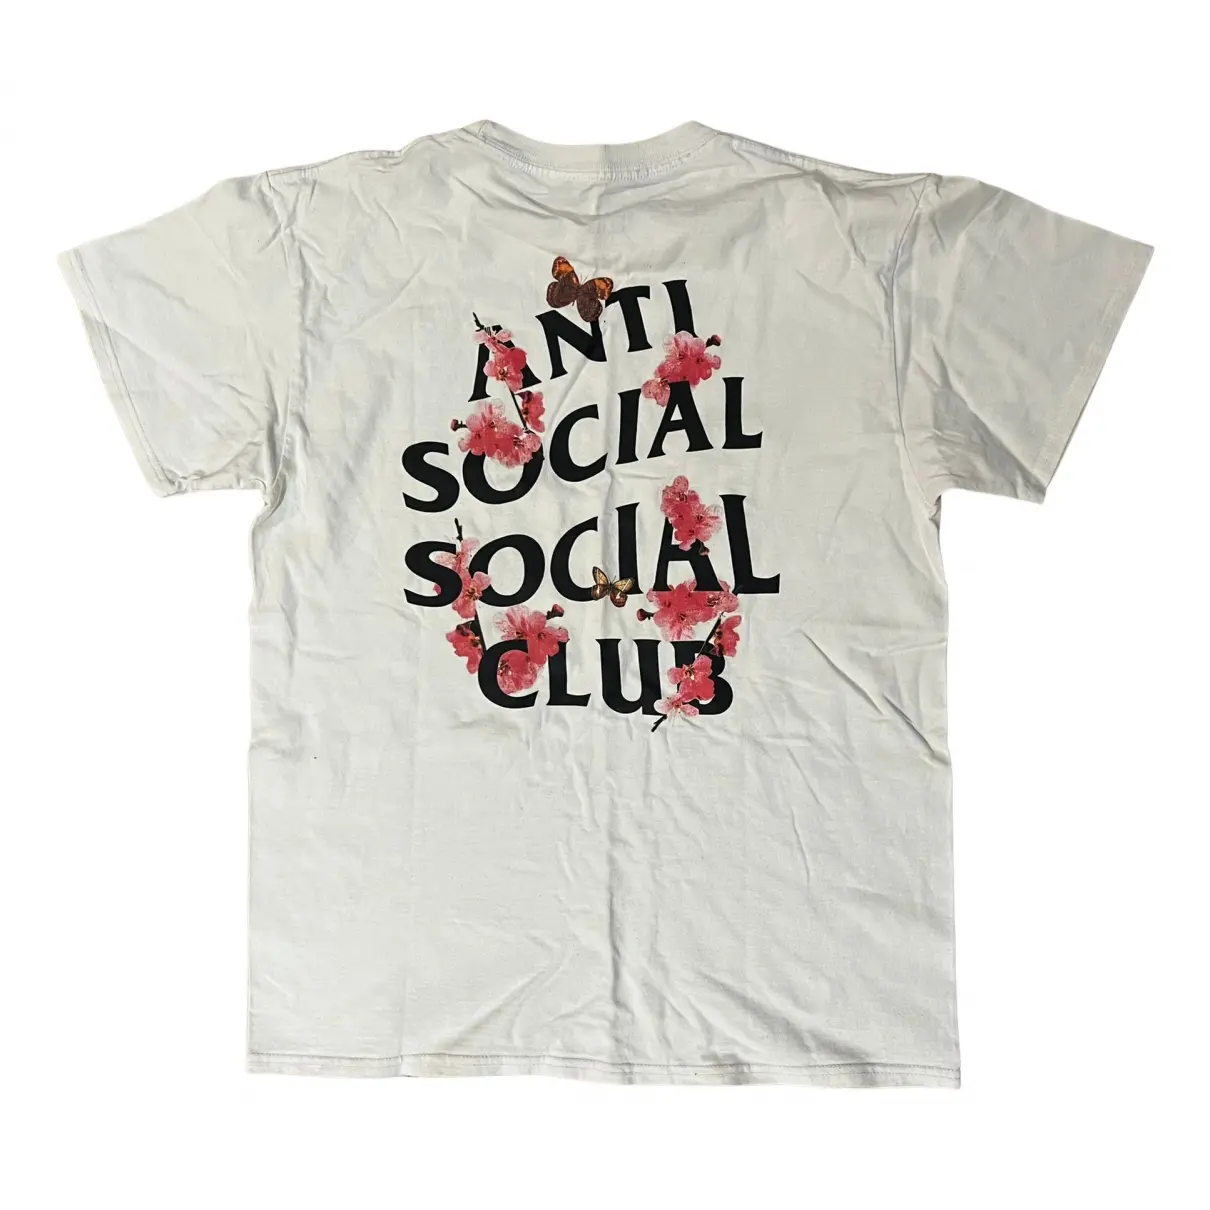 Buy Anti Social Social Club T-shirt online